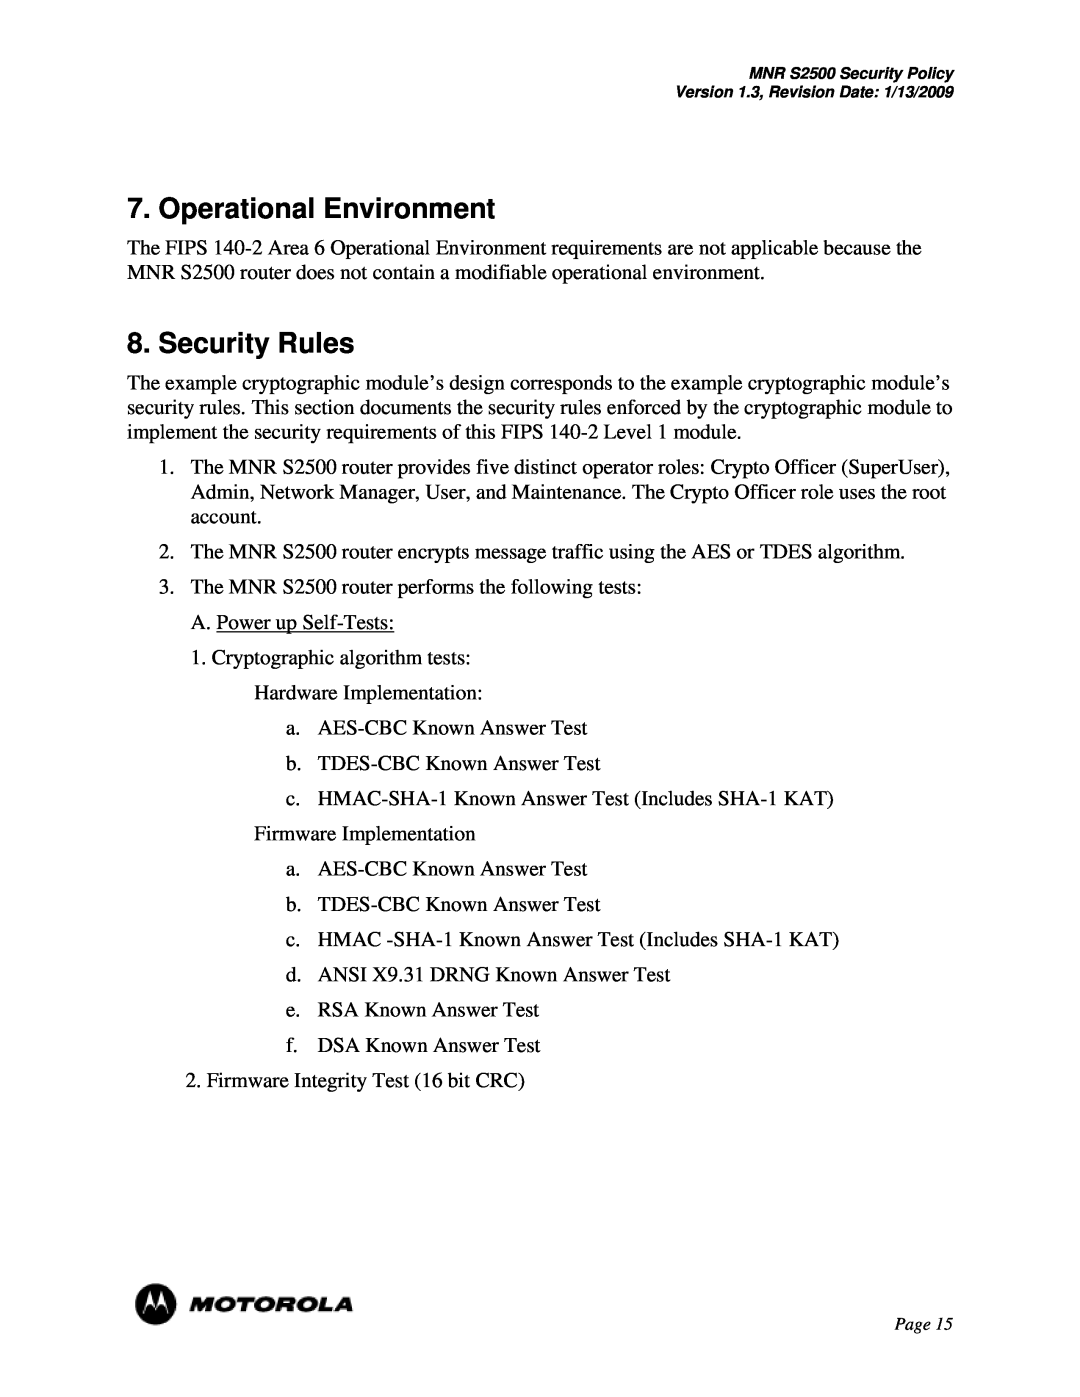 Motorola S2500 manual Operational Environment, Security Rules 